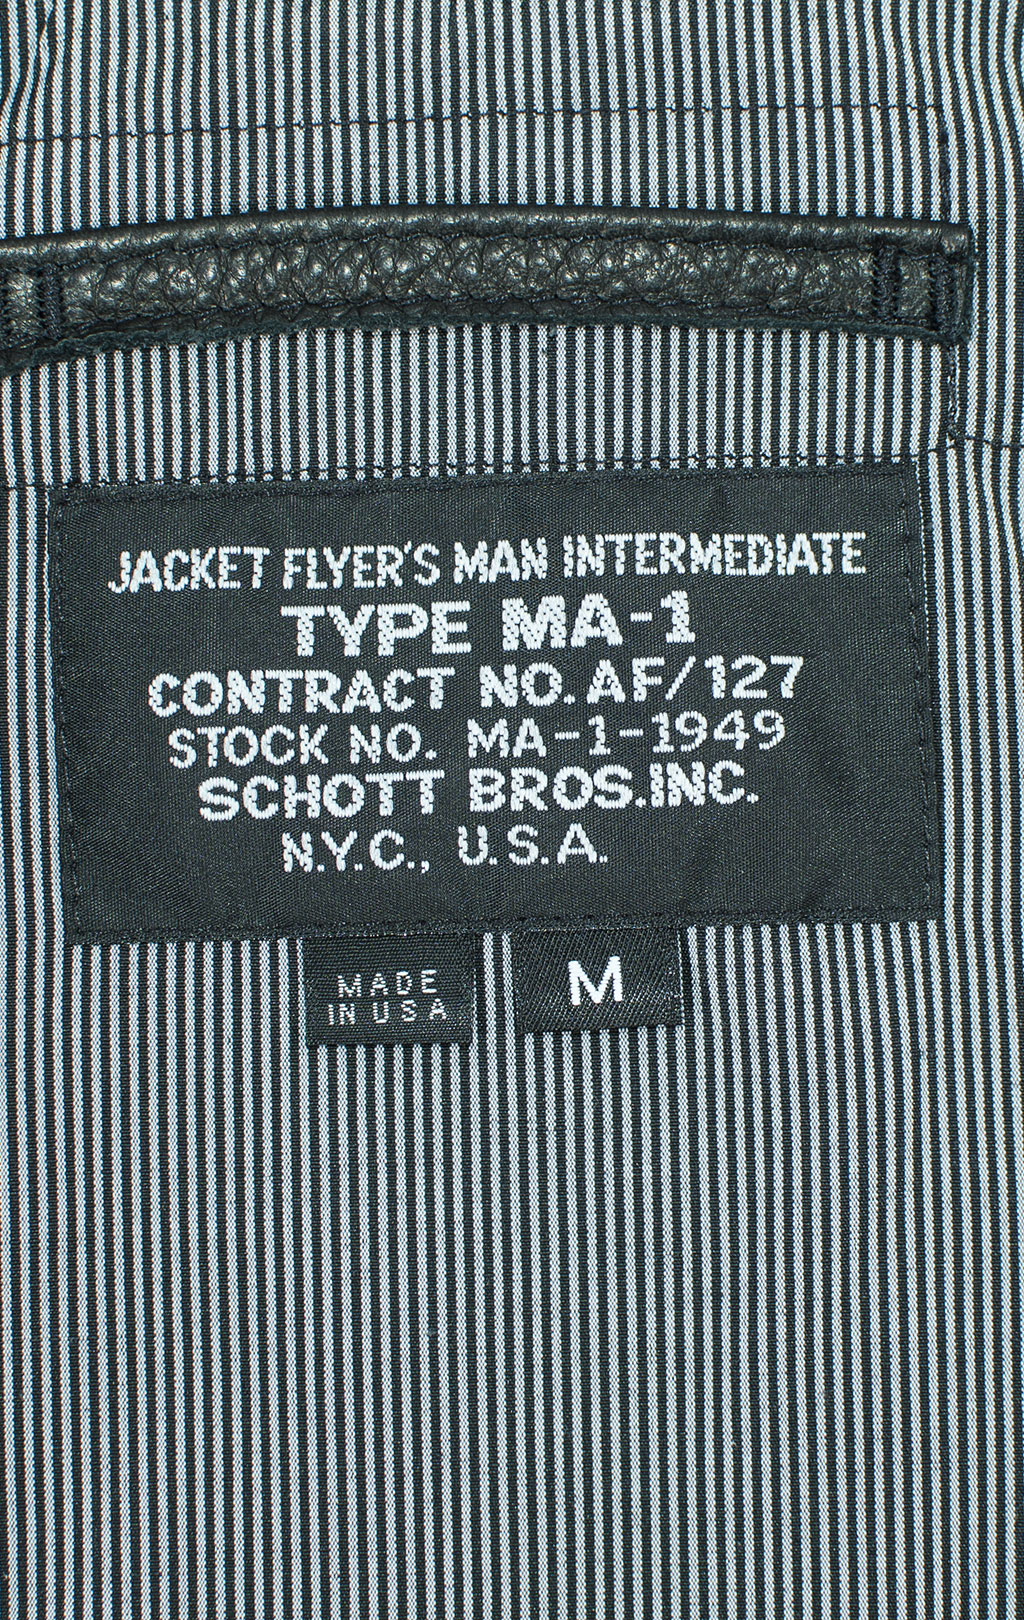 Куртка-бомбер SCHOTT NYC MA-1 BOMBER JCT Lightweight Natural Pebble Cowhide Leather 27 кожа black (227) 